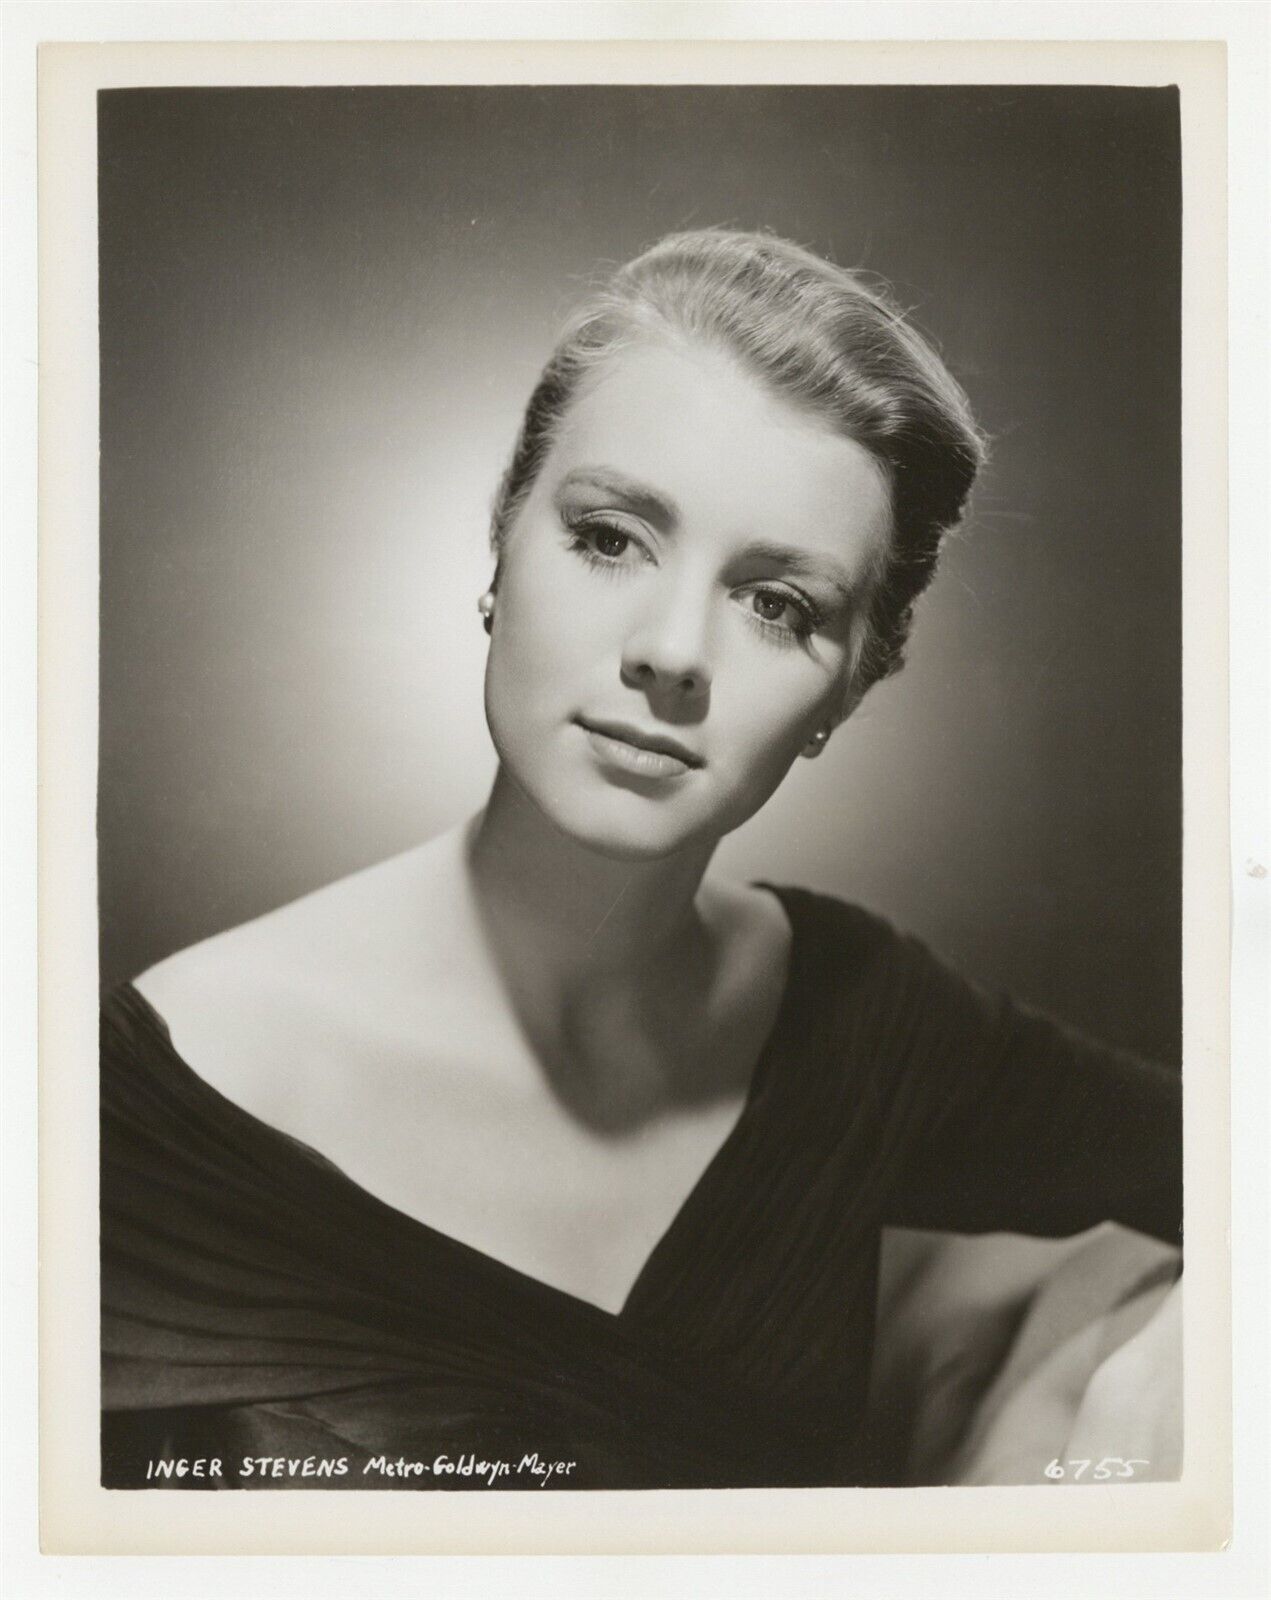 Inger Stevens 1959 Spectacular Portrait MGM Glamor Photo Swedish Actress J9812